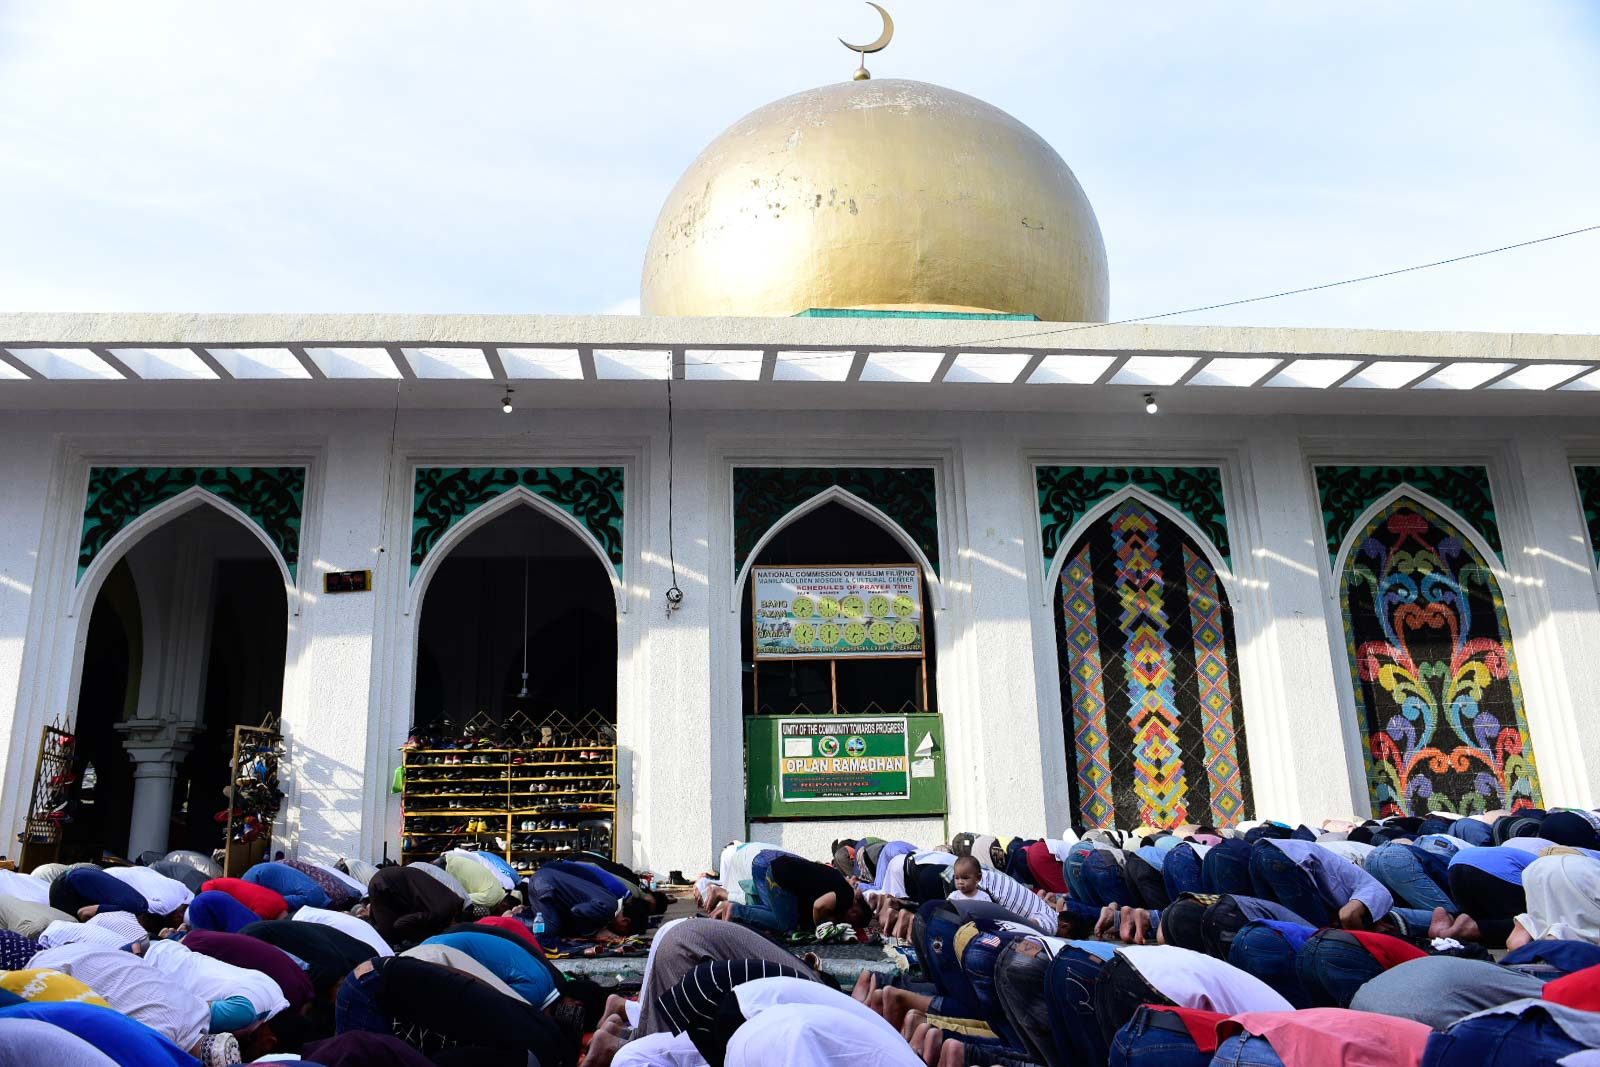 On Eid 2019, Filipino Muslims recall Ramadan teachings to attain peace